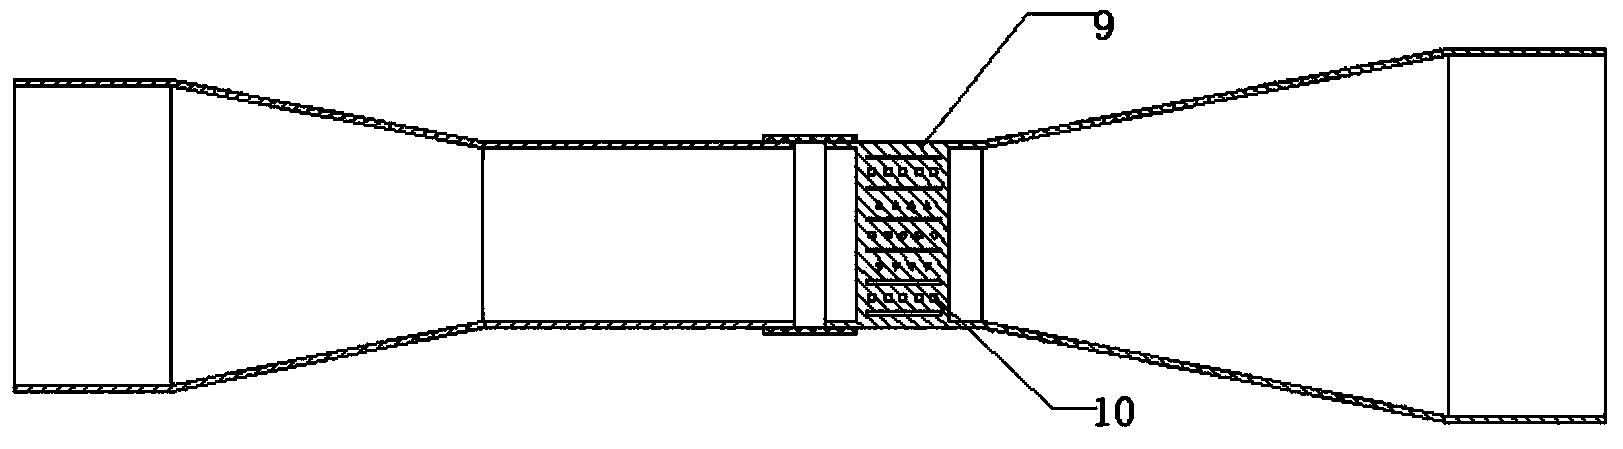 Rotating Venturi mixer with uniform plate